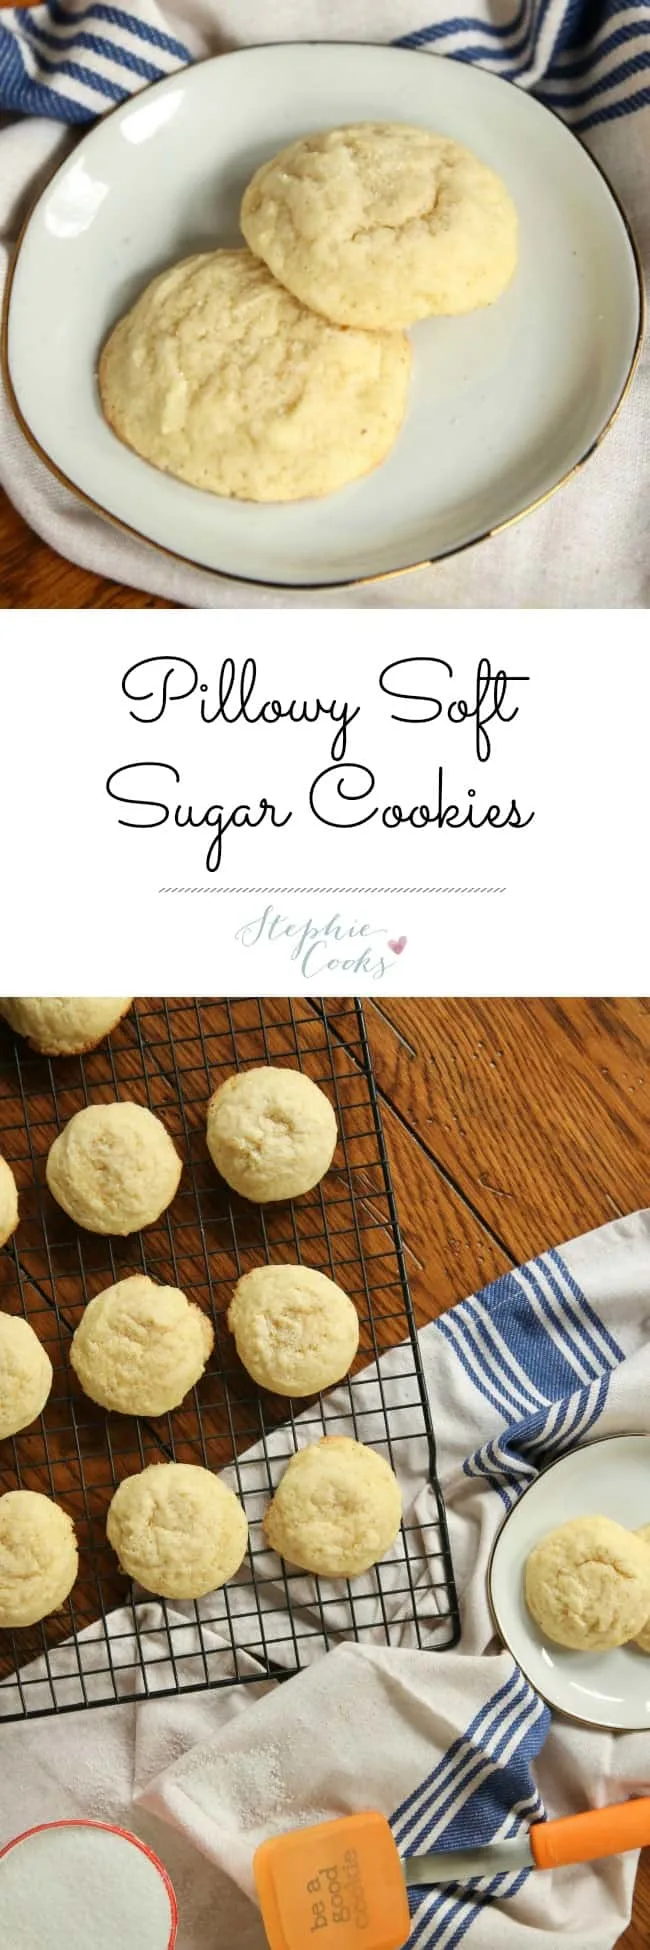 Pillowy Soft Sugar Cookies